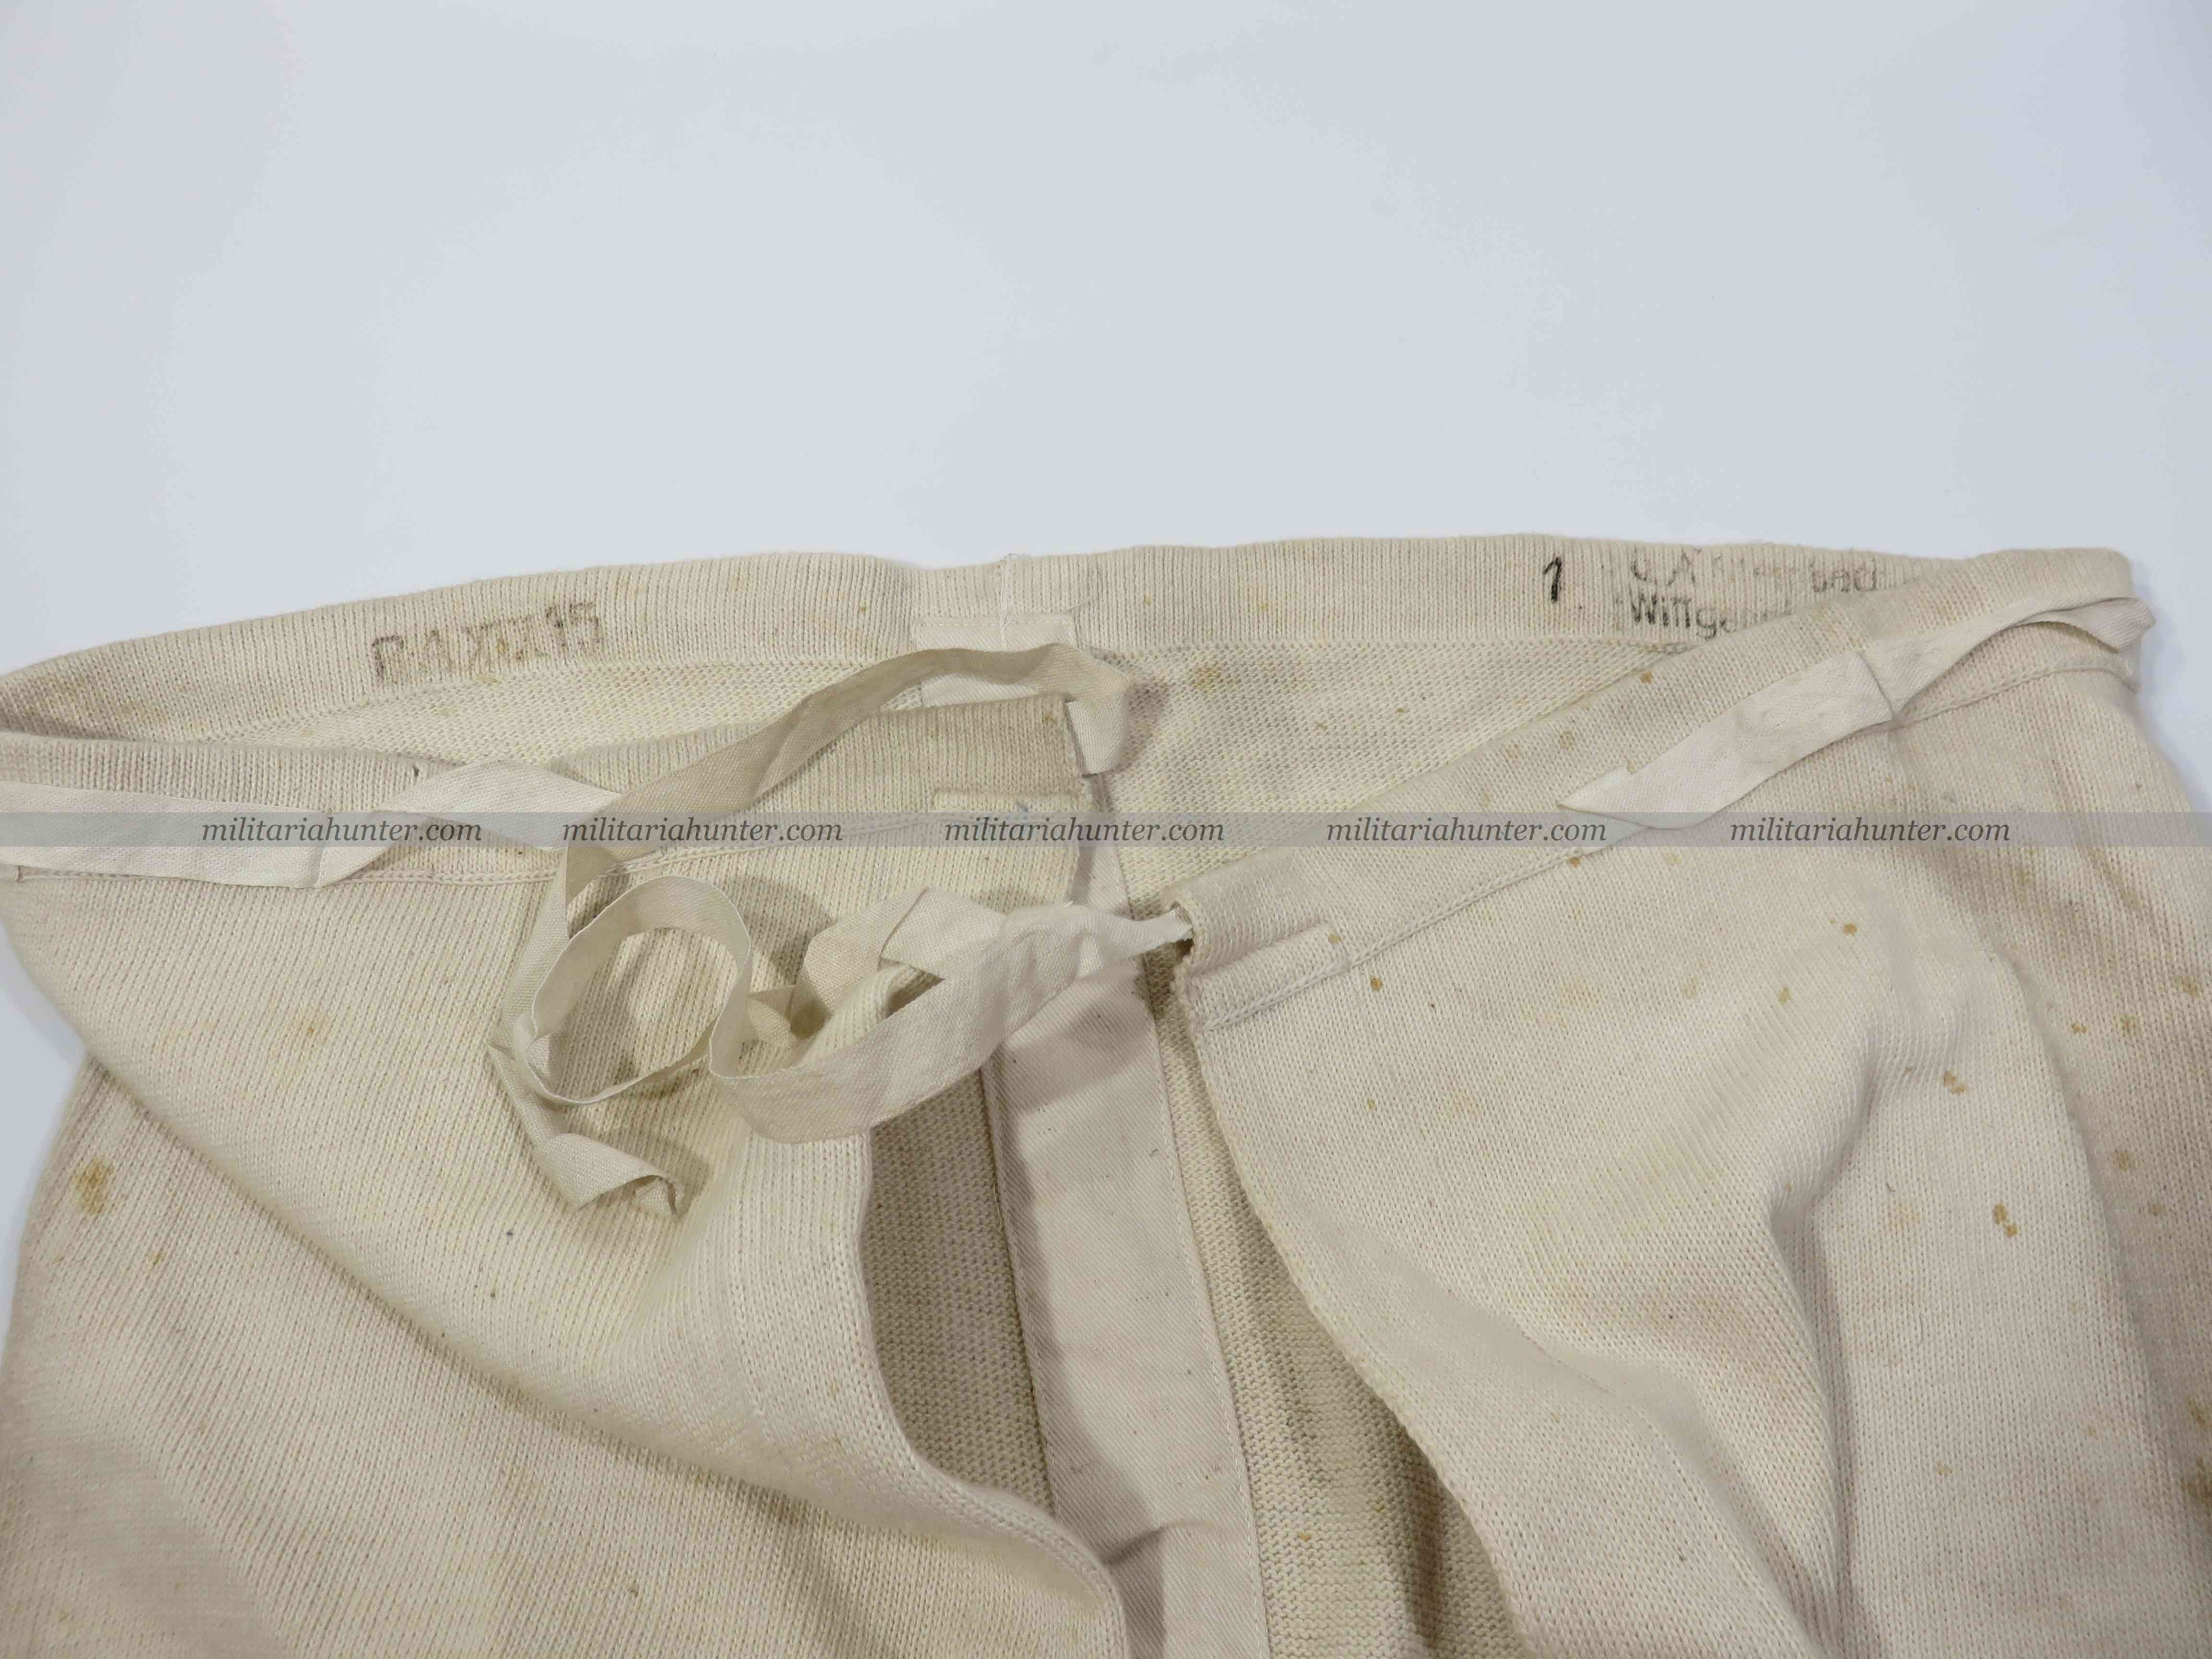 militaria : ww1 saxonian underwear - caleçon saxon ww1 1915